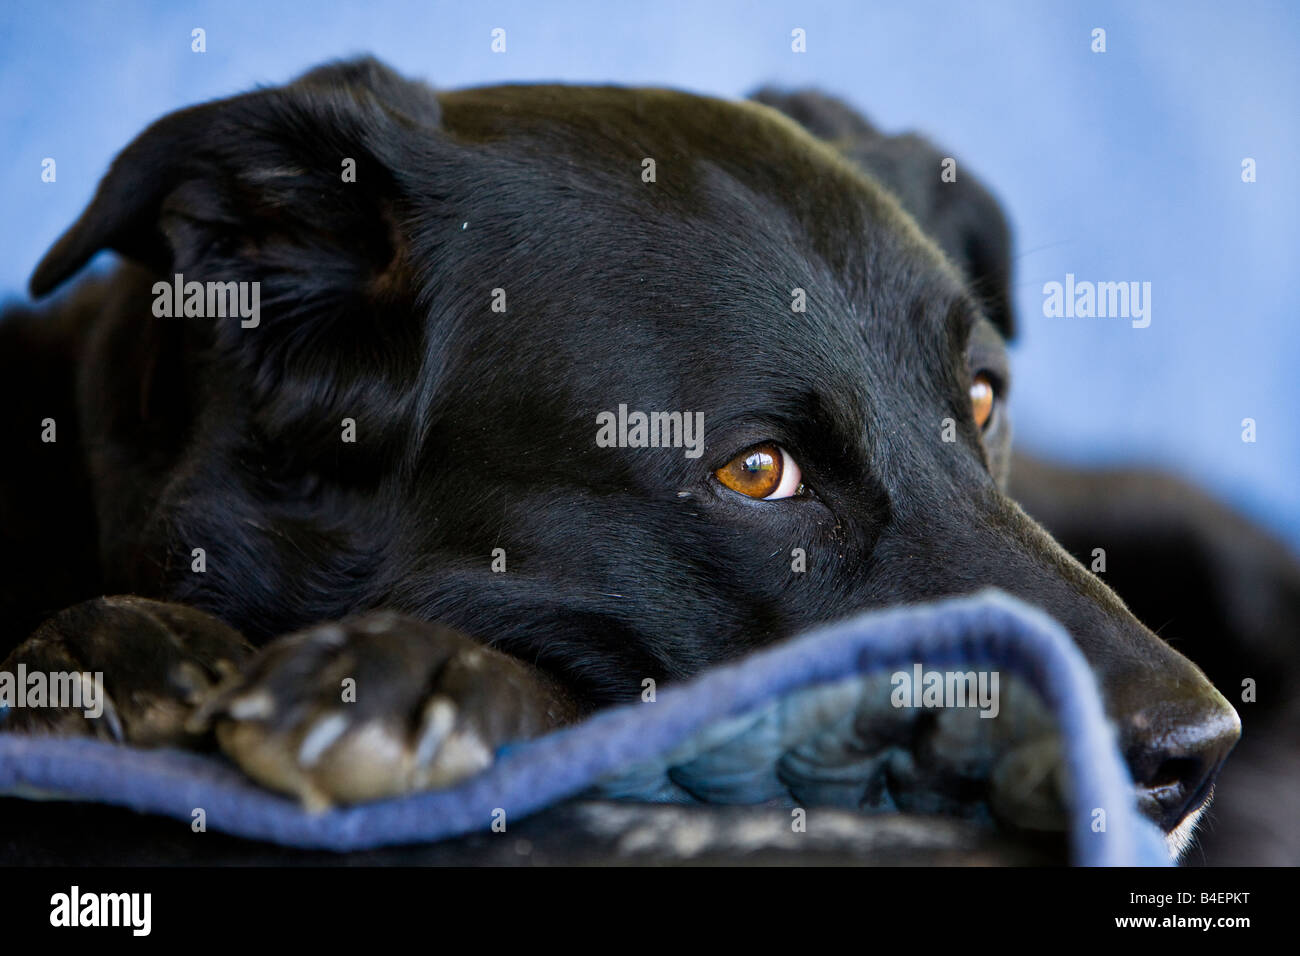 Masset a cute dog, Canis familiaris, in Brantford, Ontario, Canada. Stock Photo